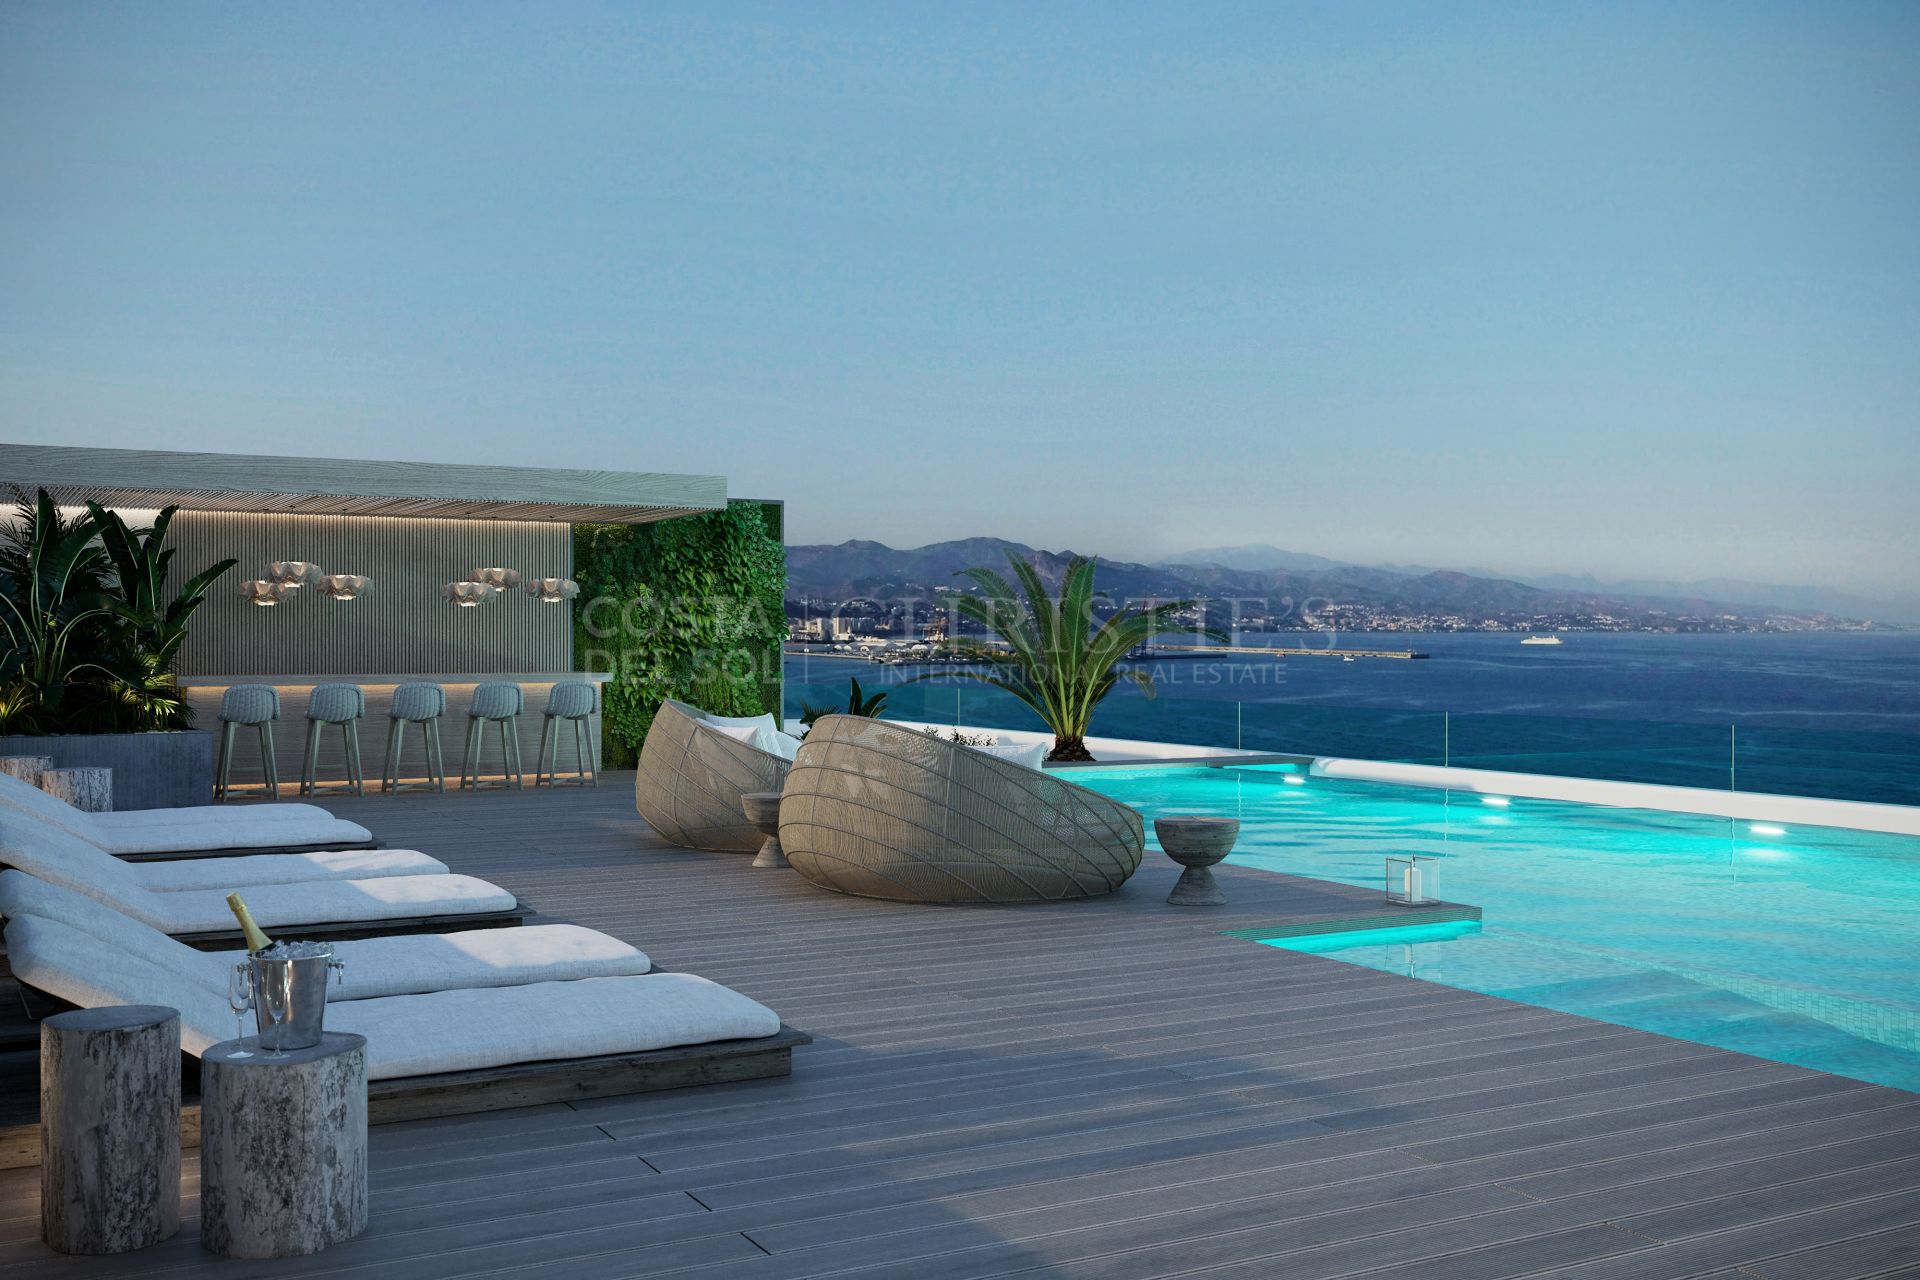 Increible Apartamento en Planta Alta en Malaga con Vista Panoramica. | Christie’s International Real Estate